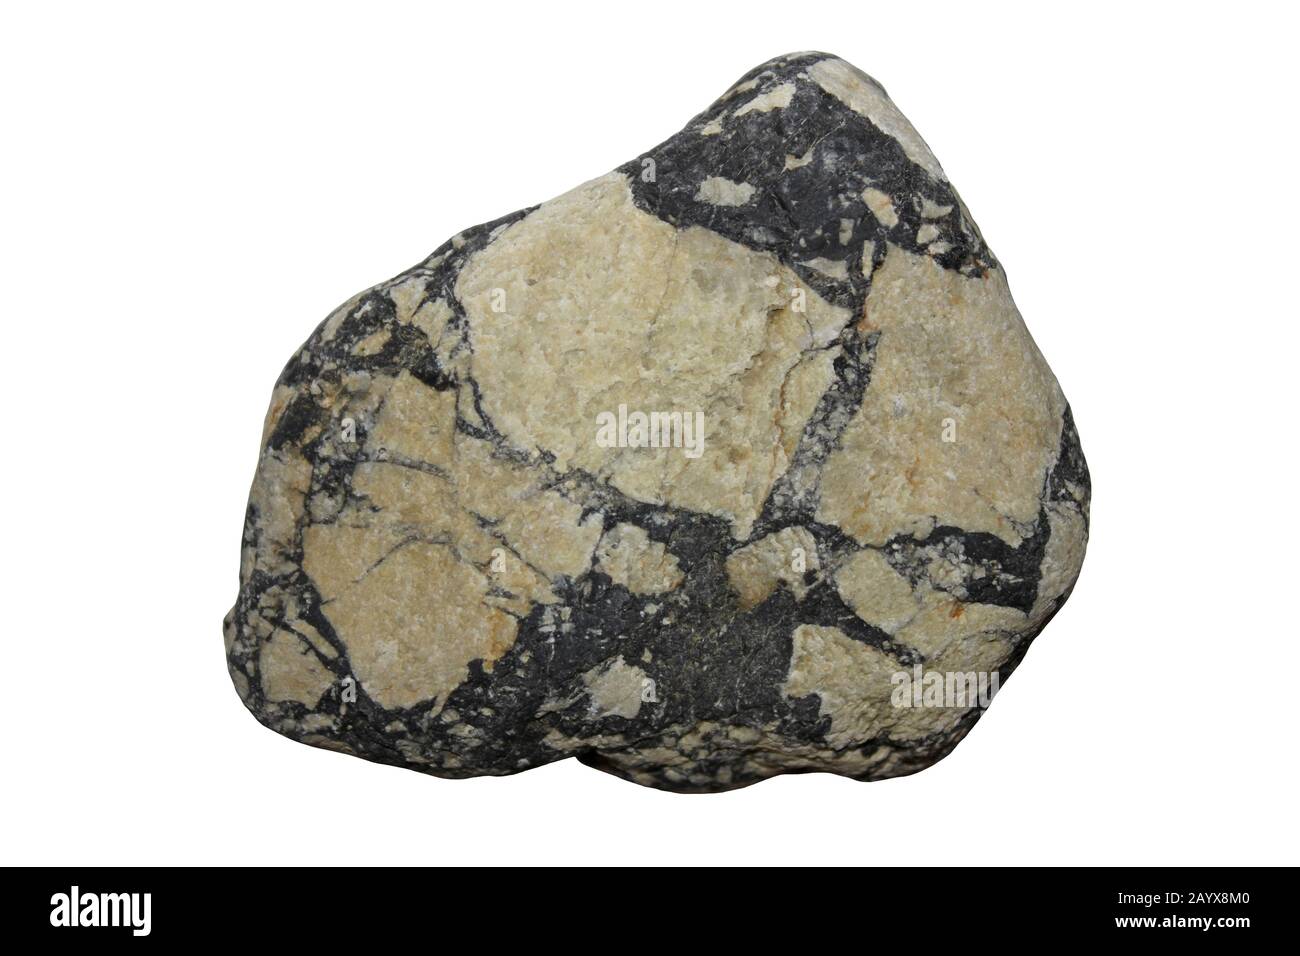 Vulkanisches Breccia Rock-Exemplar mit Eckigen Felsfragmenten in einer Basalt-Matrix Stockfoto